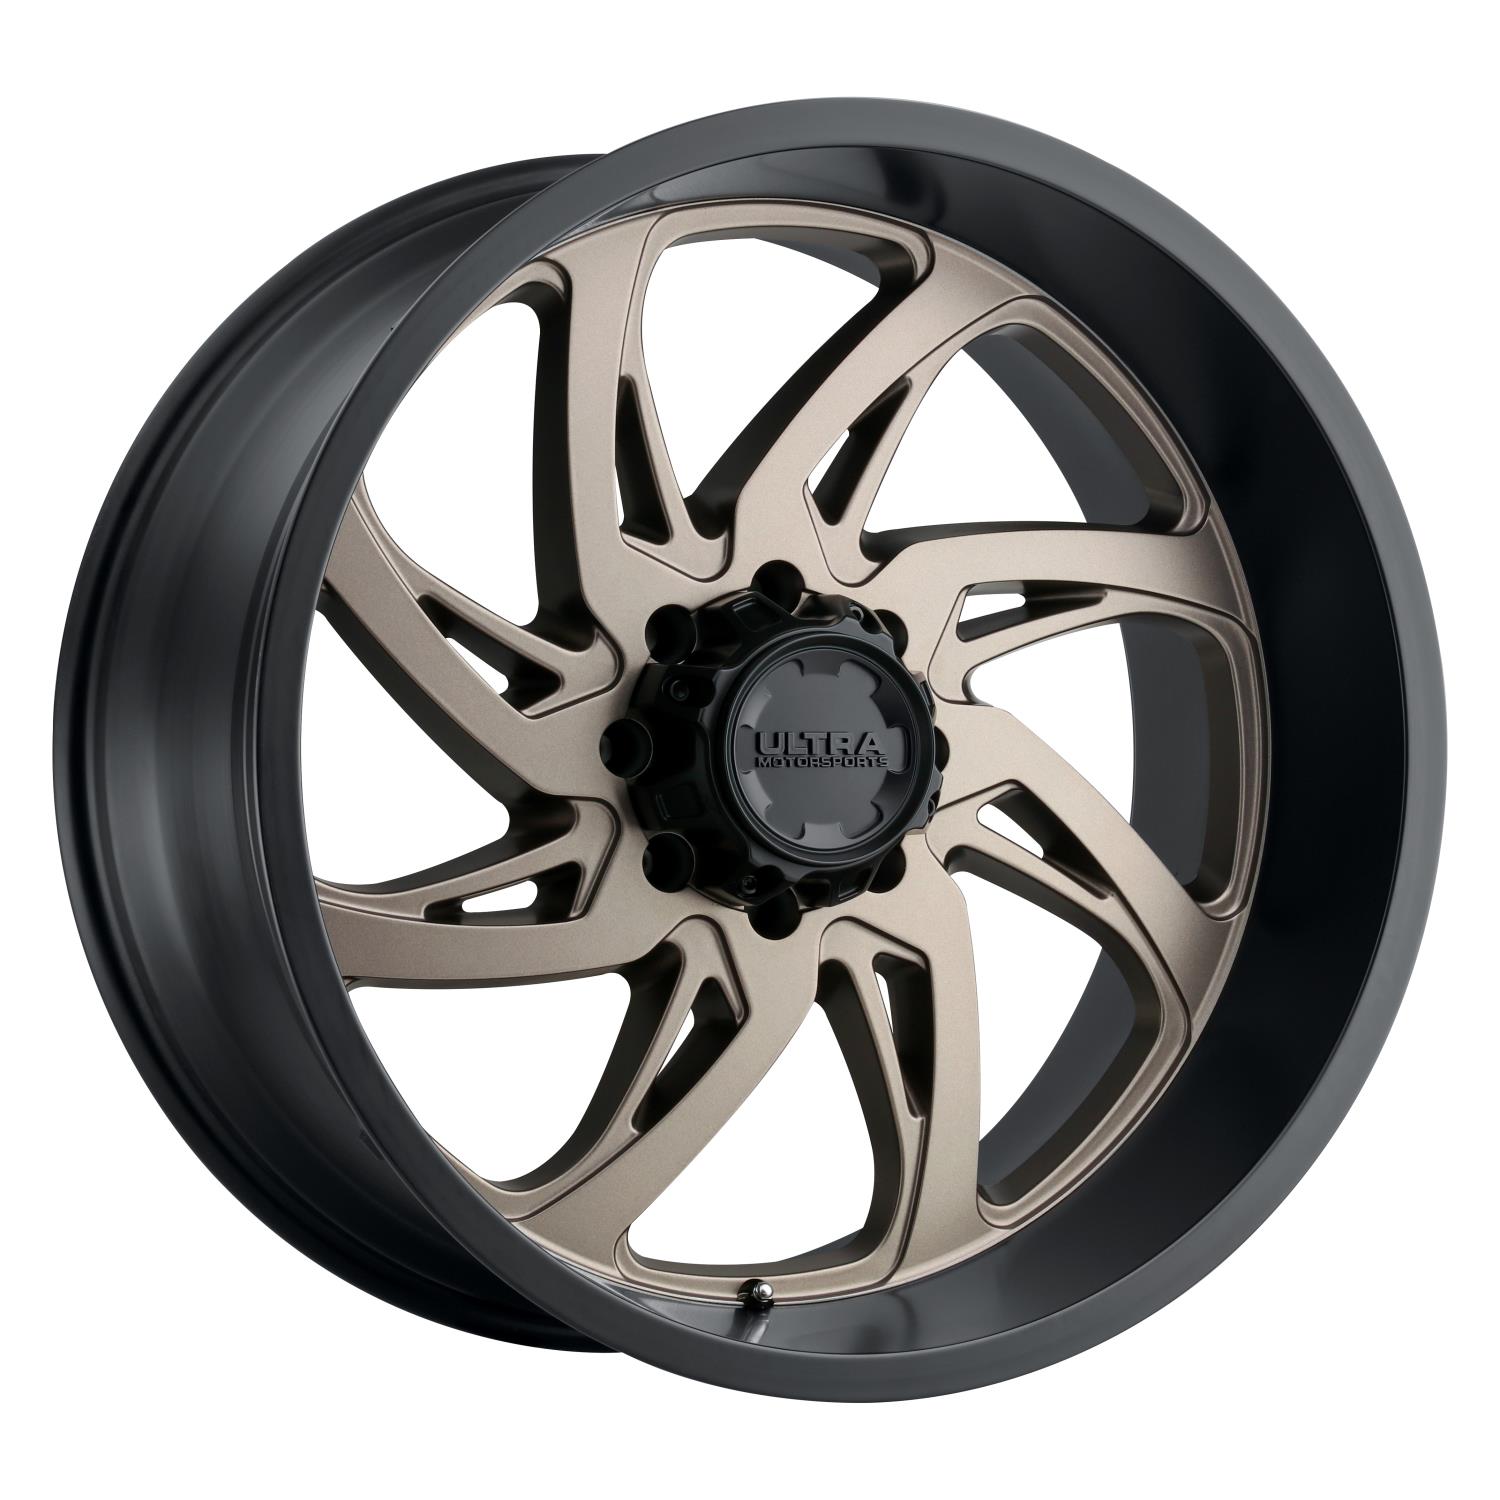 230-Series Villain Wheel, Size: 18x9", Bolt Pattern: 5x150 mm [Dark Satin Bronze w/Satin Black Lip]